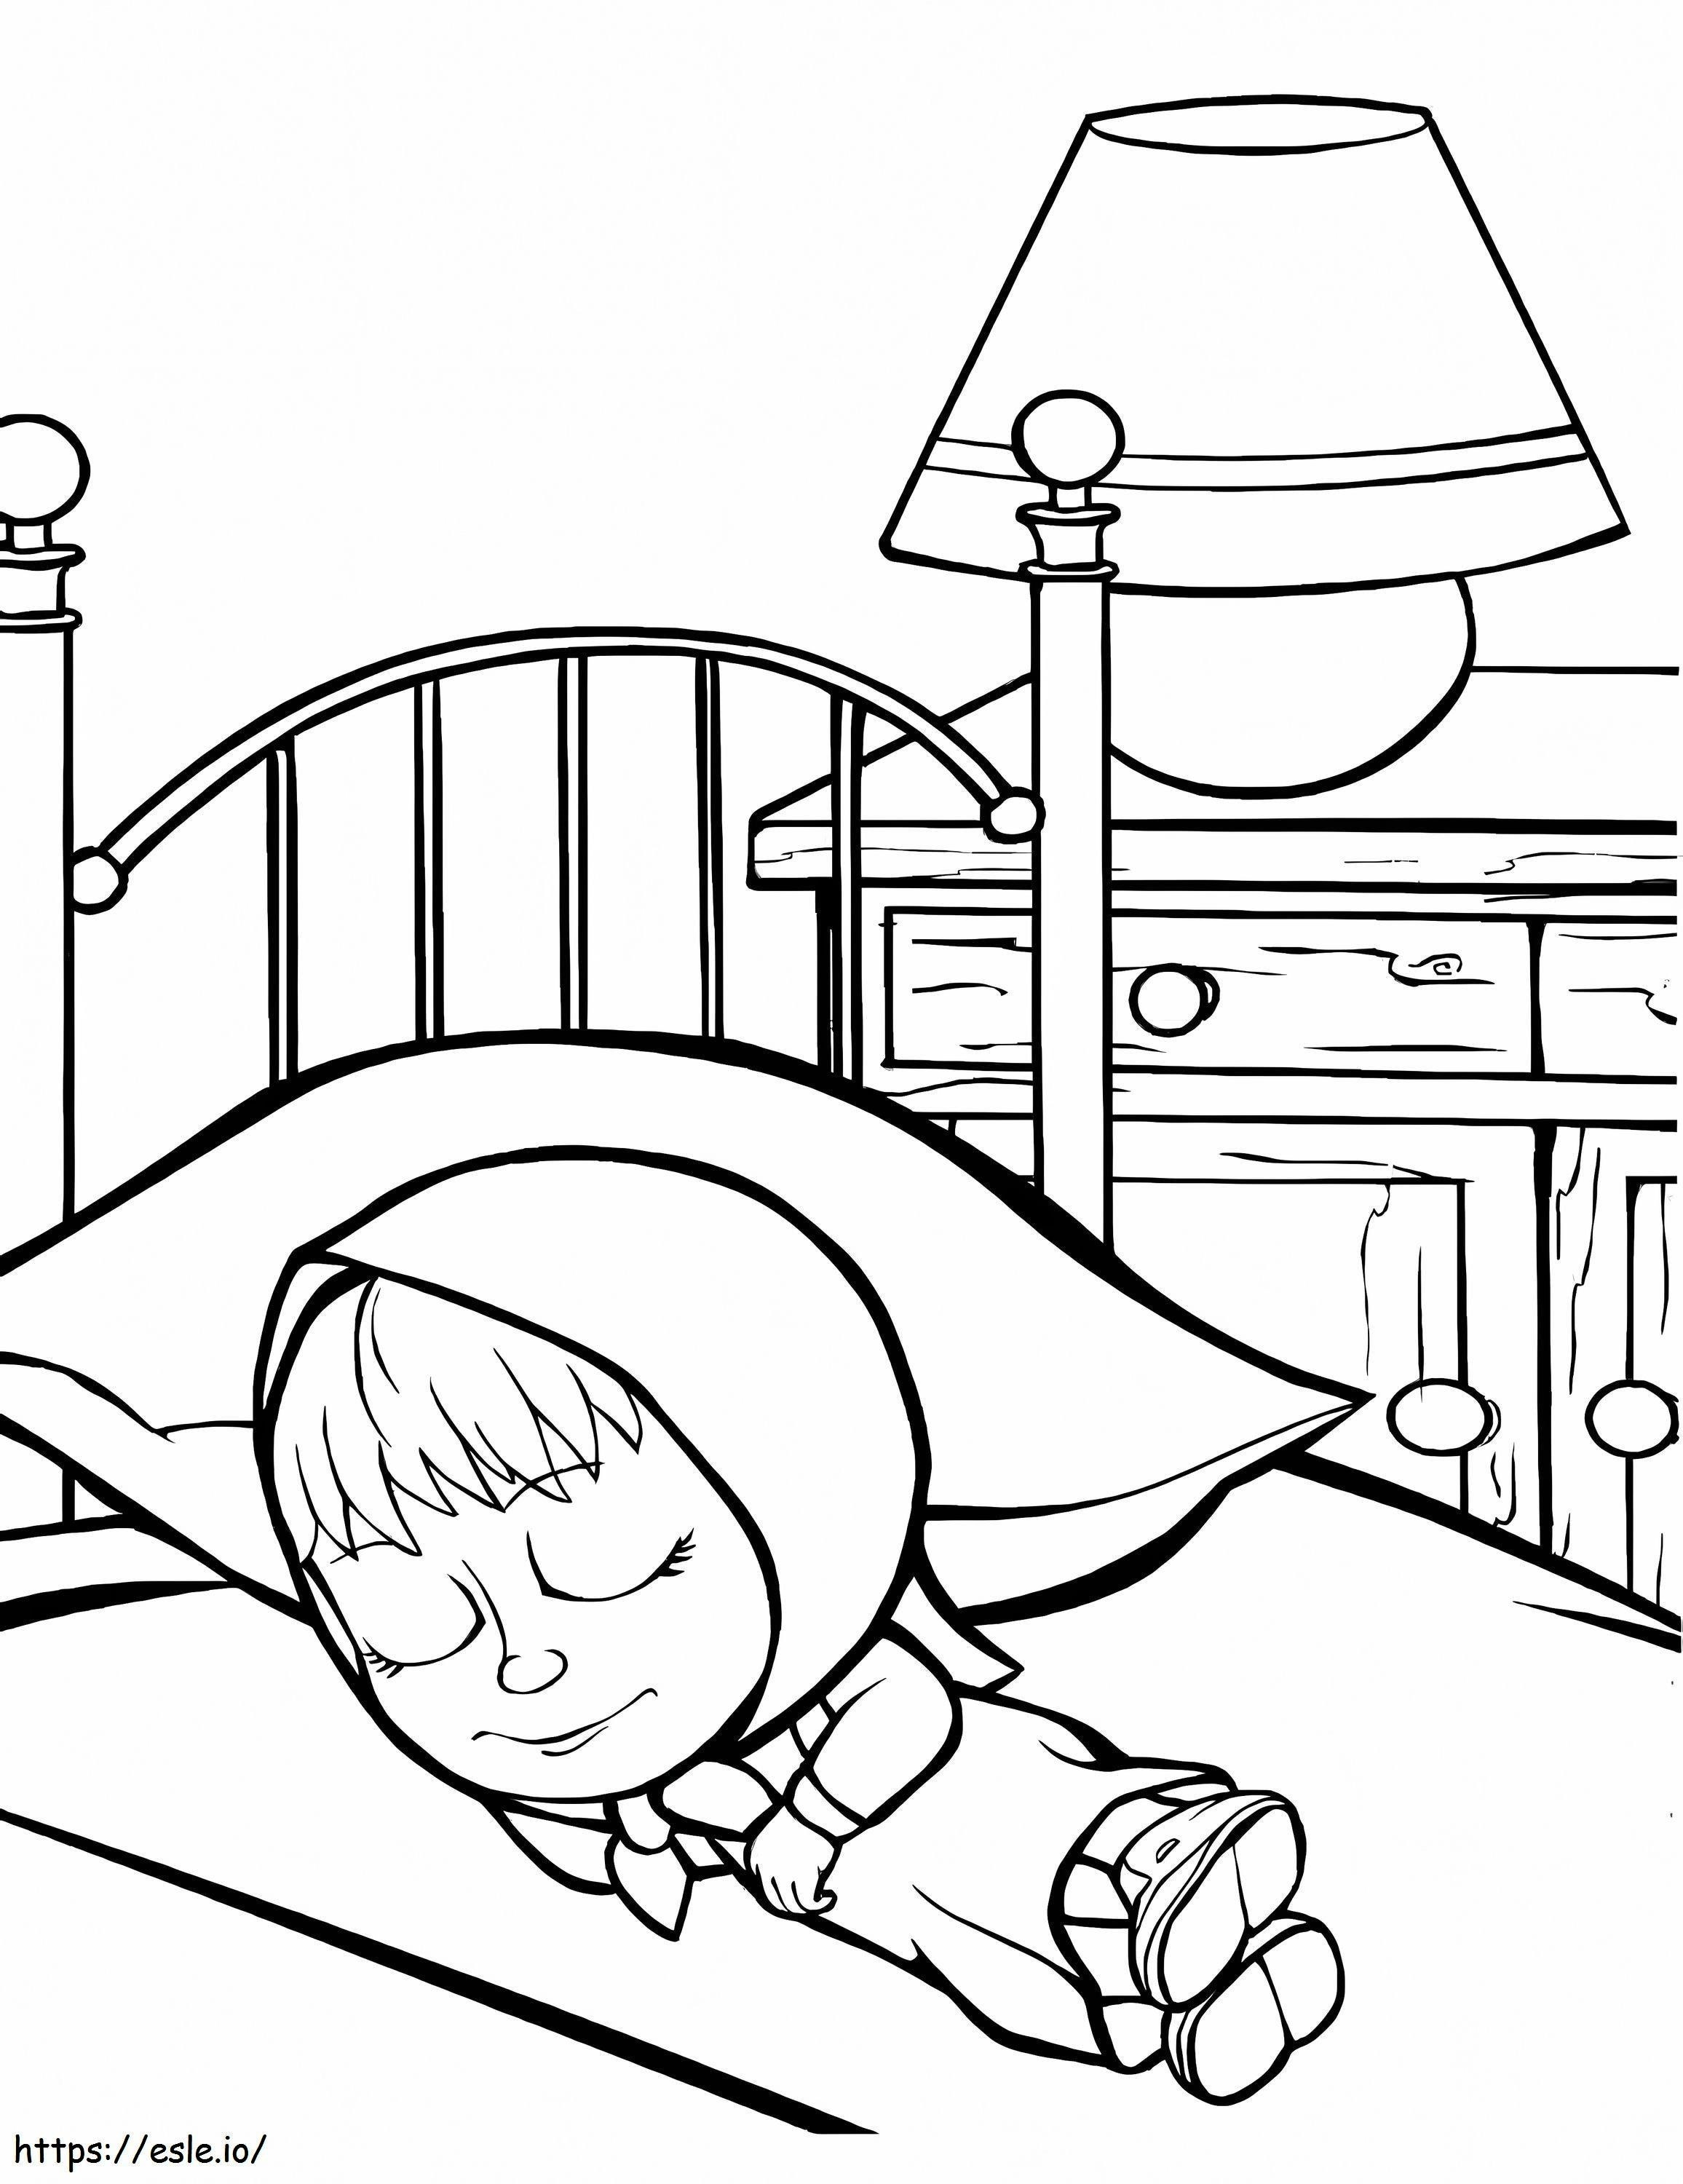 Masha Sleeping coloring page